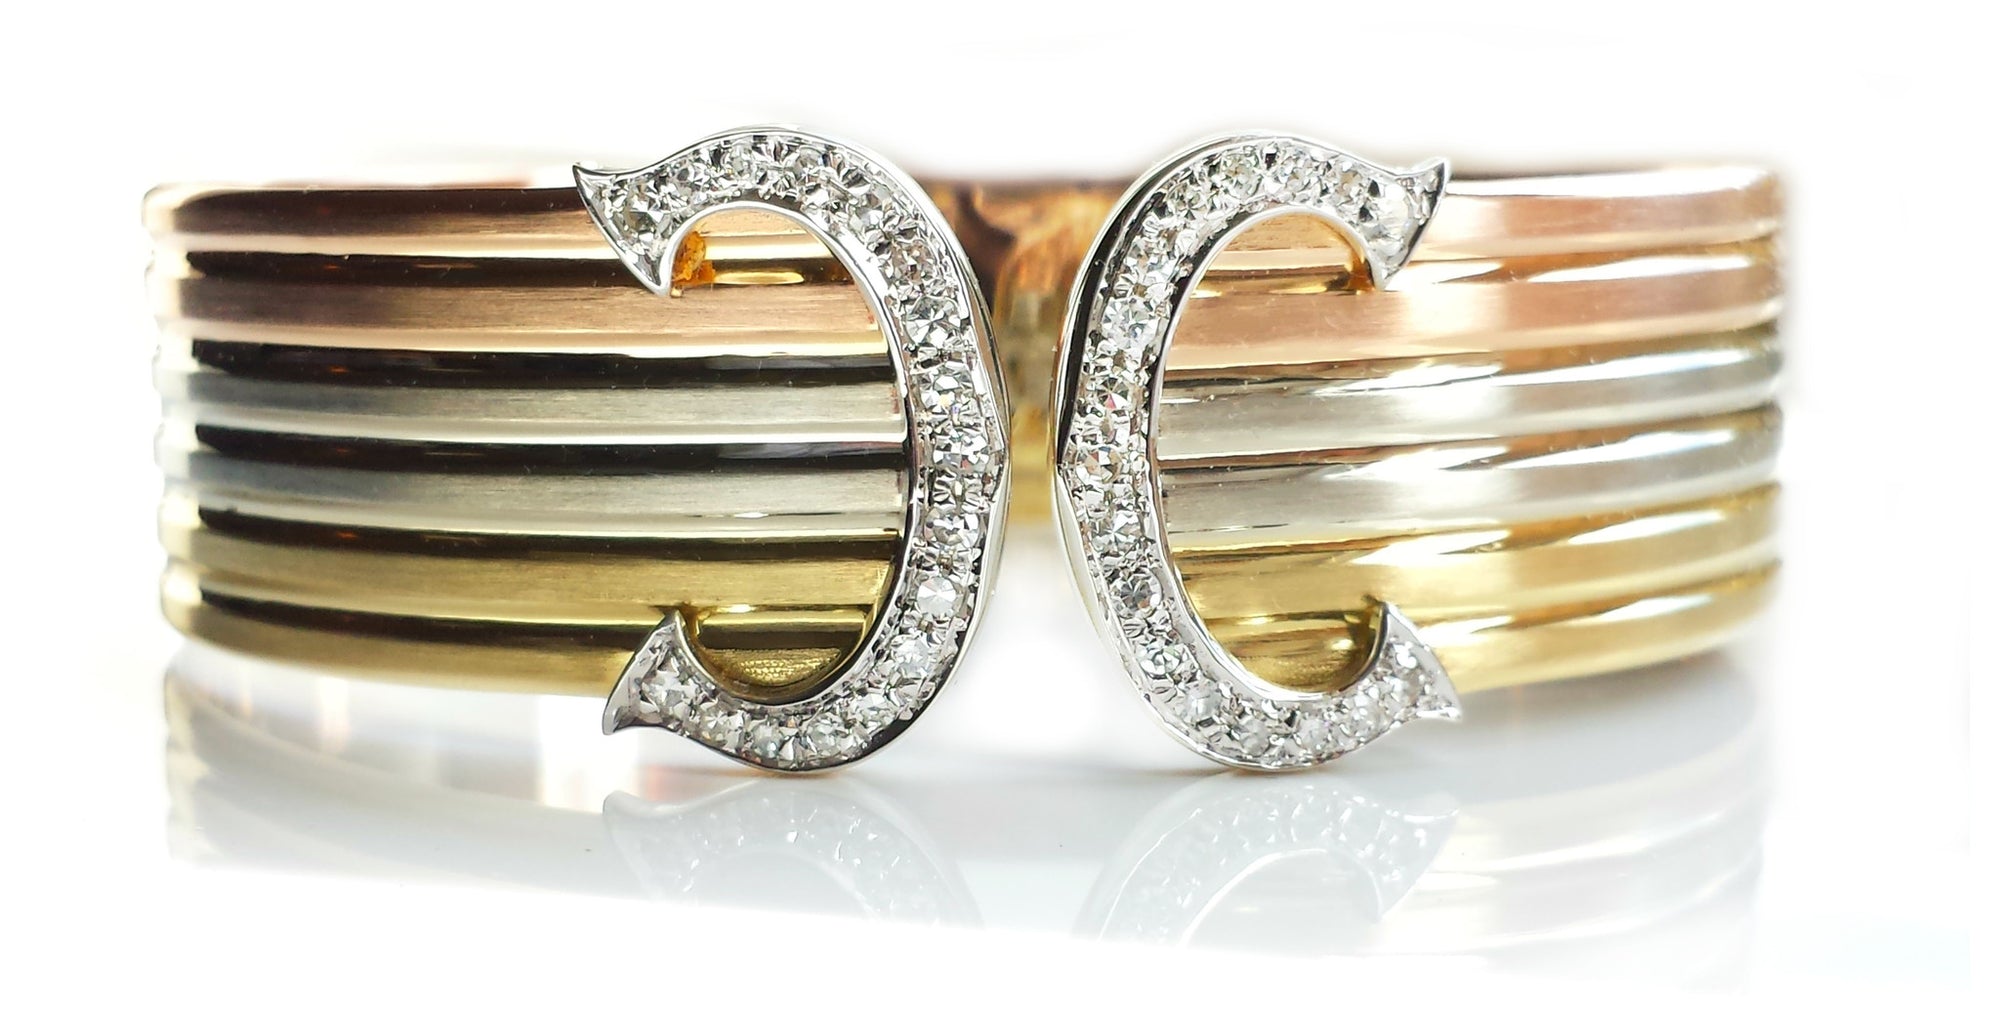 Cartier Double C 'de Cartier' Decor Trinity Bracelet in 18K gold & diamond setting